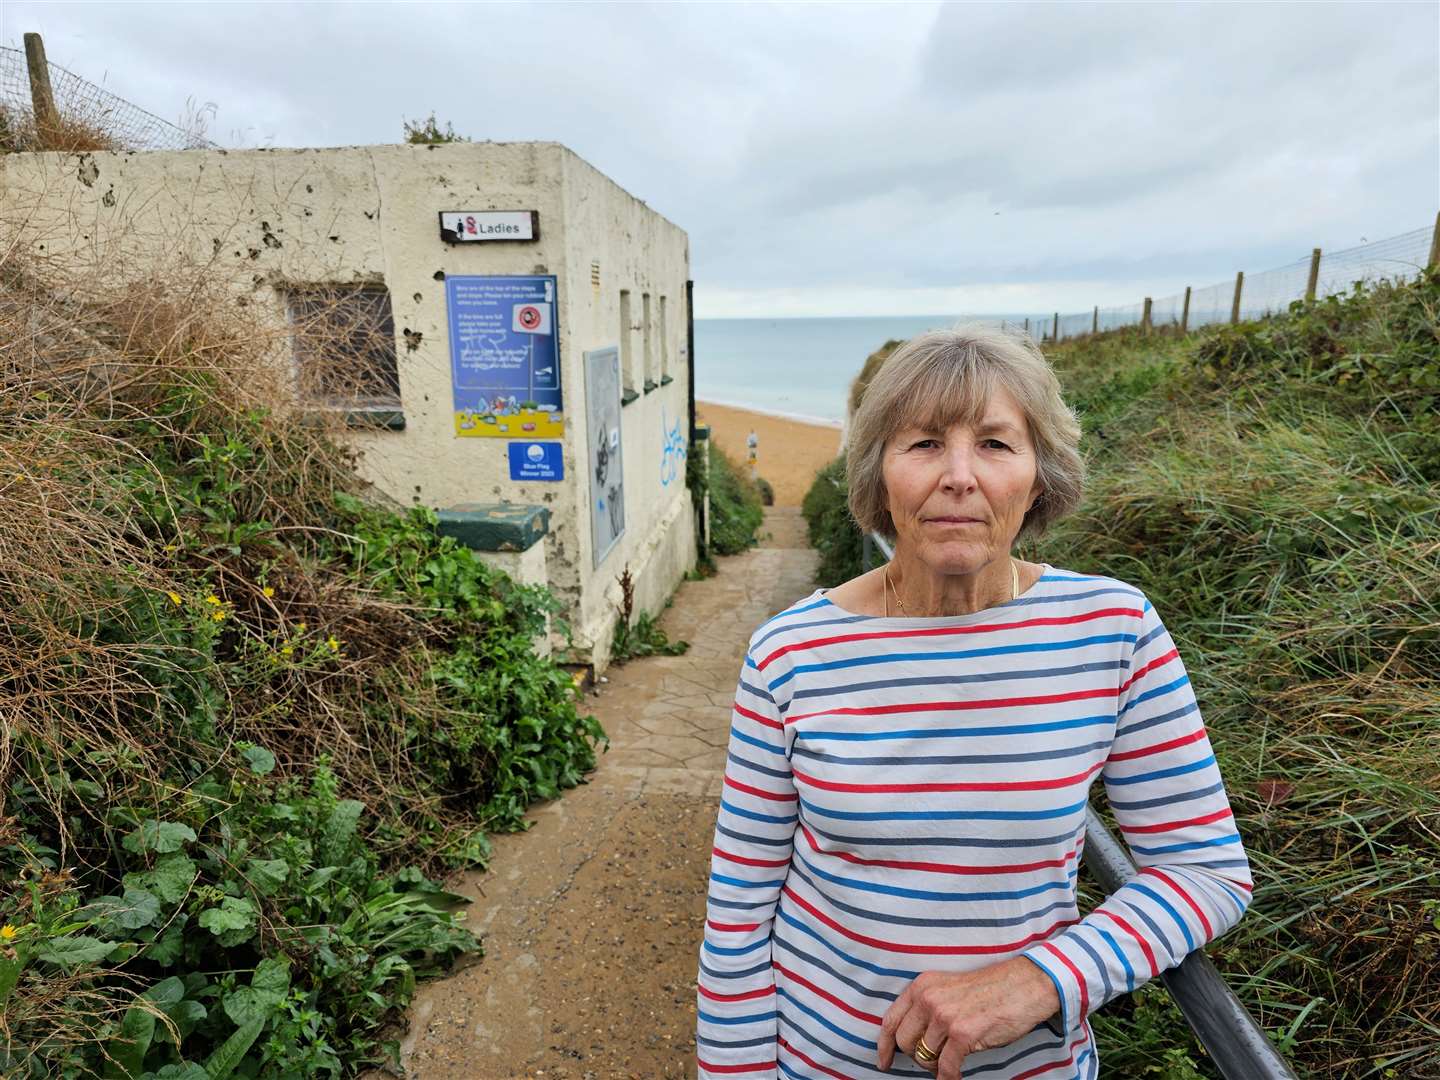 Tina Hubbard is calling for vital upgrades to the 'inadequate' toilets at Botany Bay. Picture: Tina Hubbard